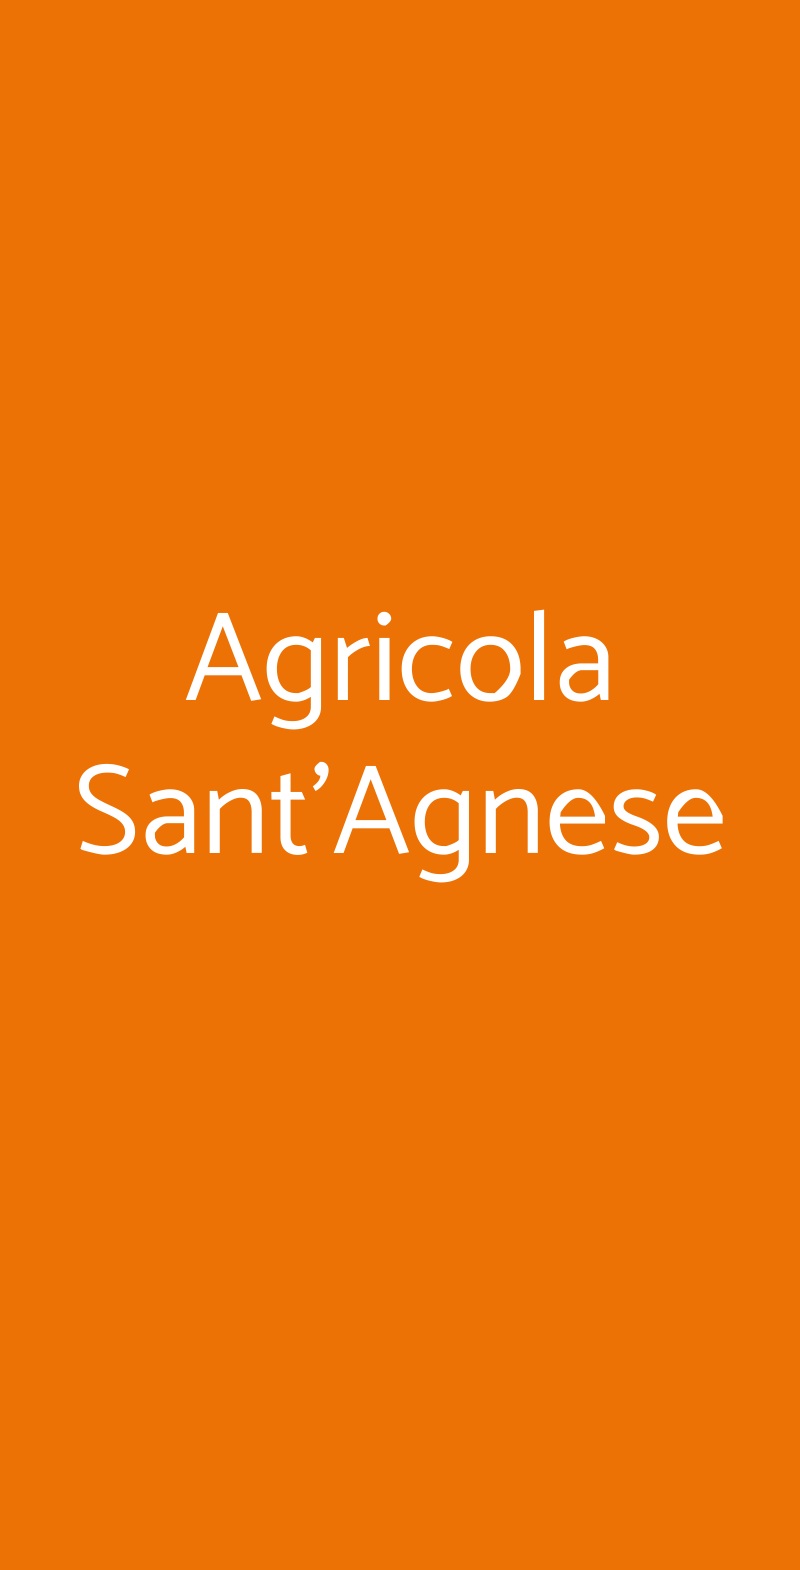 Agricola Sant'Agnese Milano menù 1 pagina